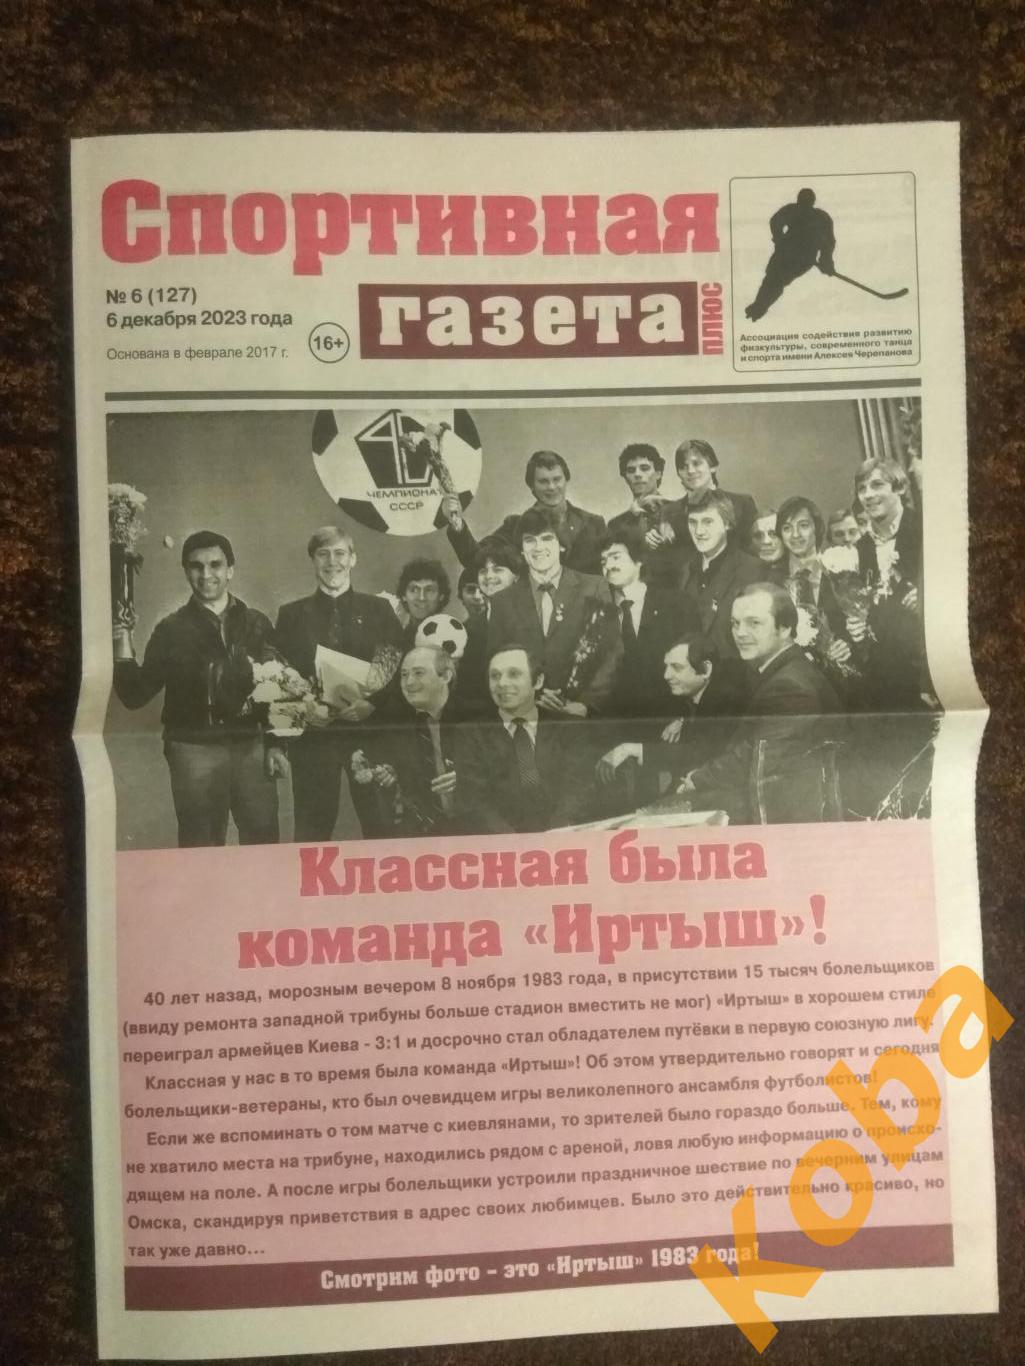 Иртыш Омск 1983 футбол Шперлинг Авангард хоккей Спортивная газета плюс 2023 №6